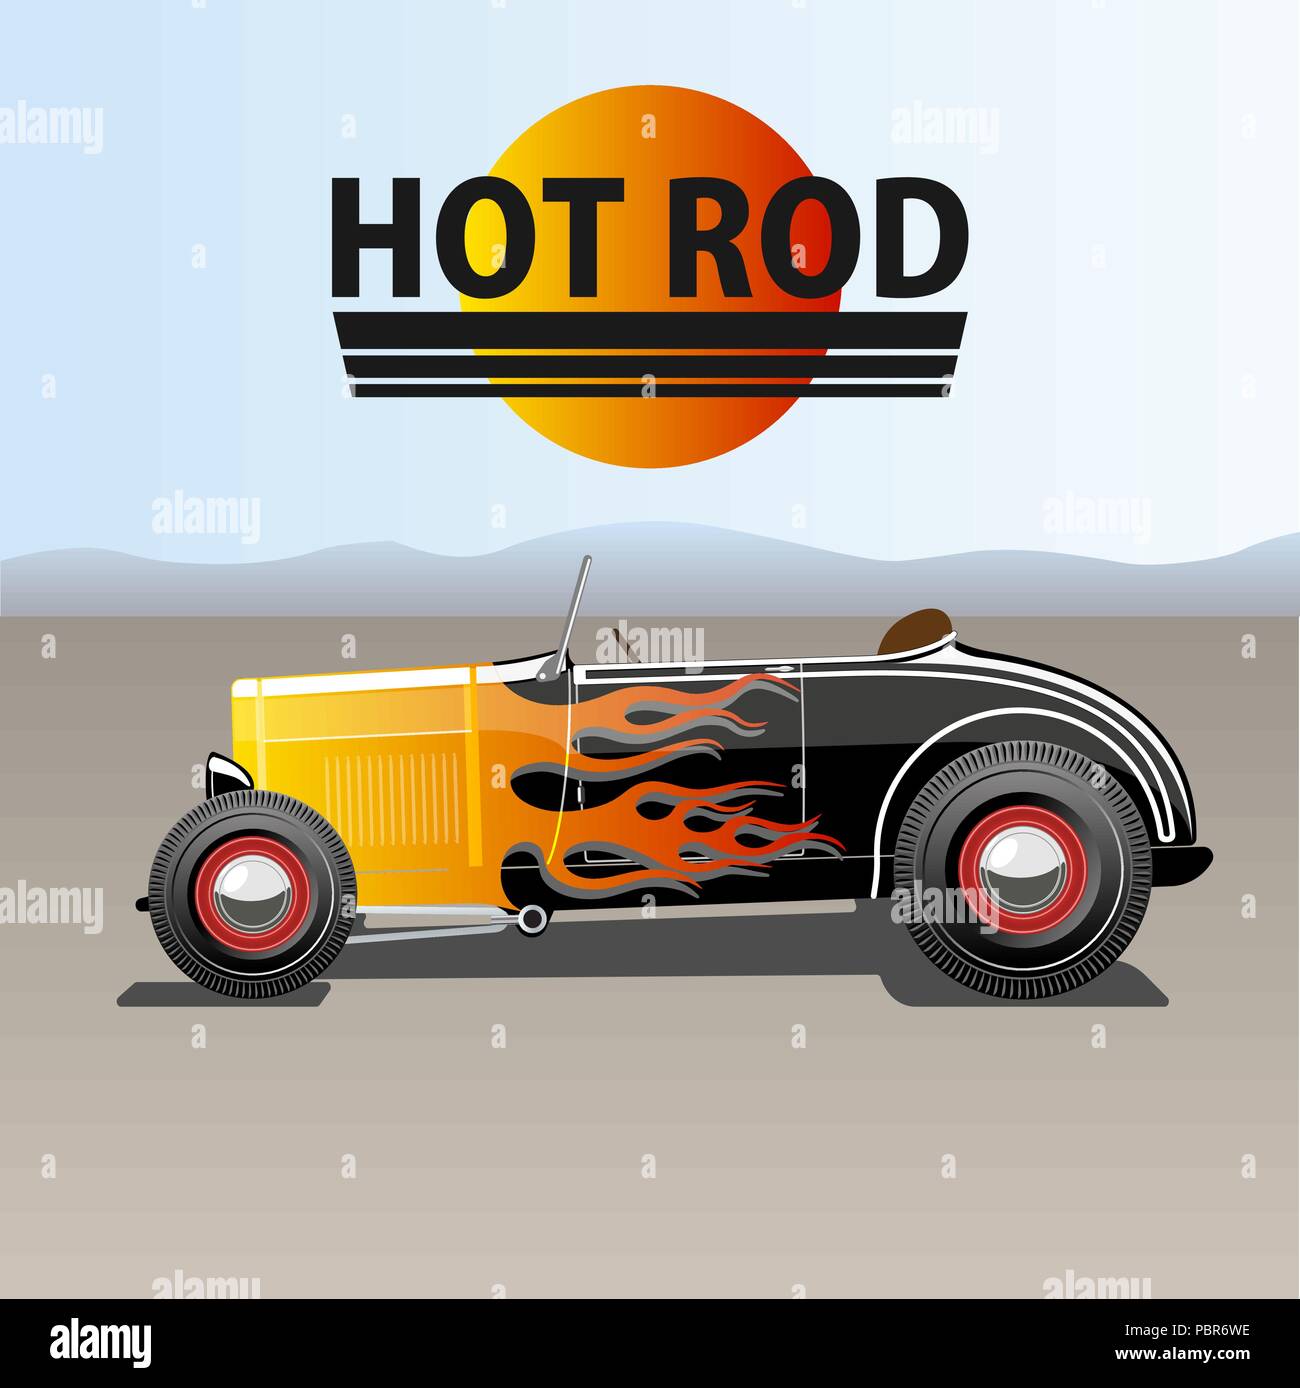 Hot rod car Stock Vector